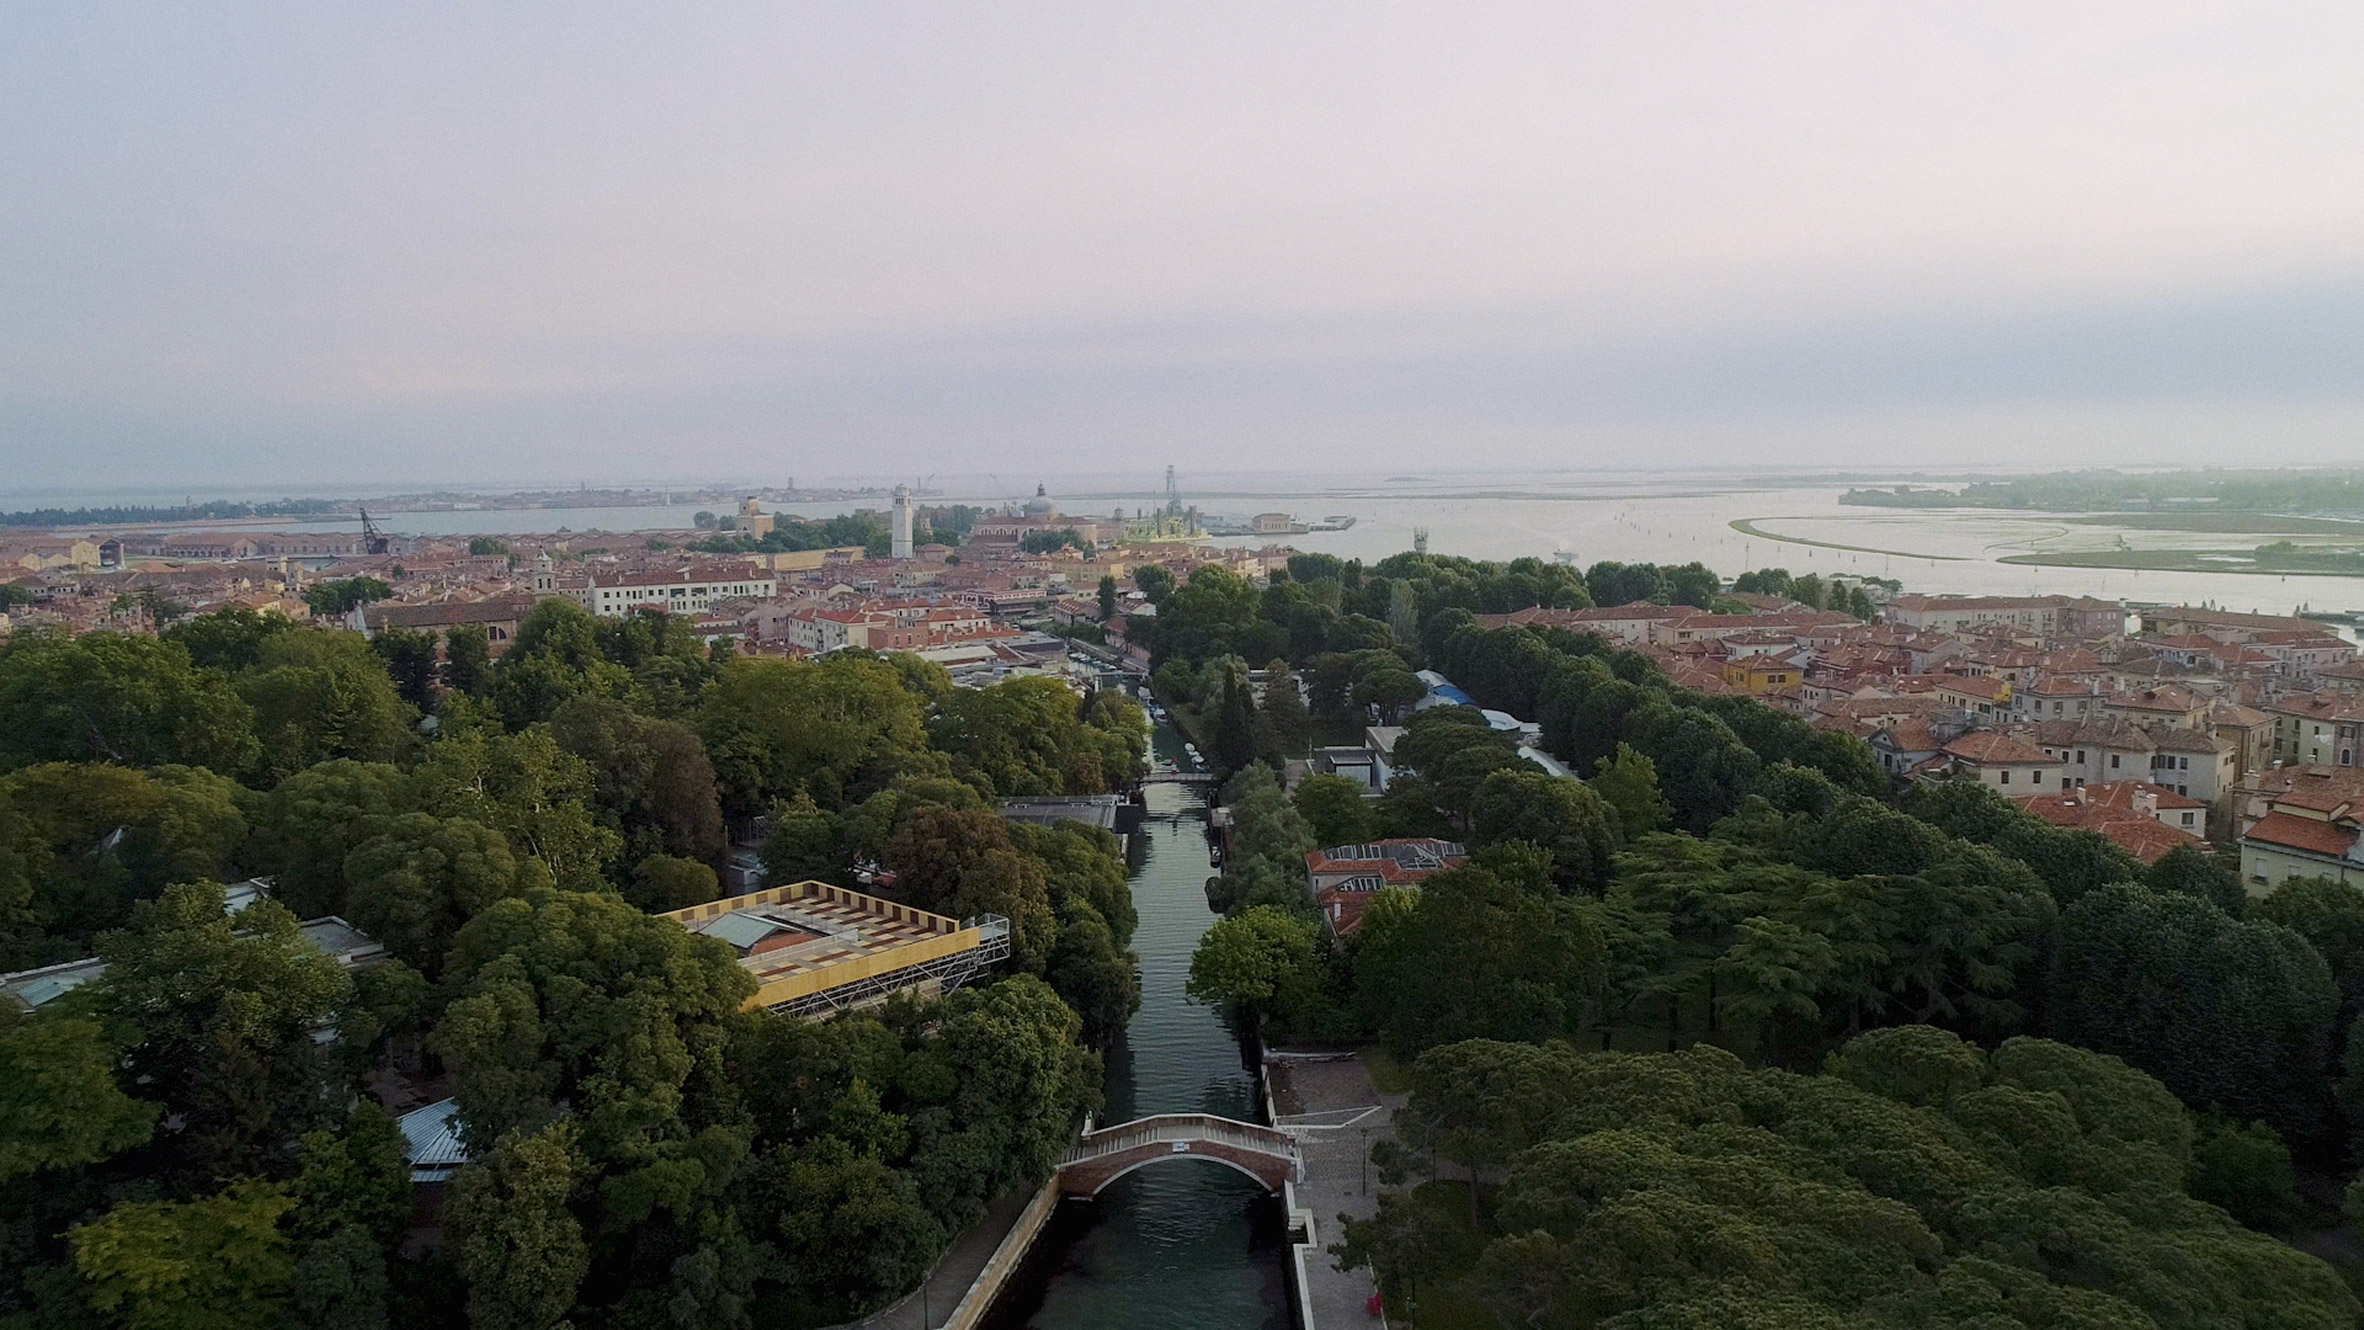 British Pavilion Venice Architecture Biennale, drone photography by Cultureshock Media